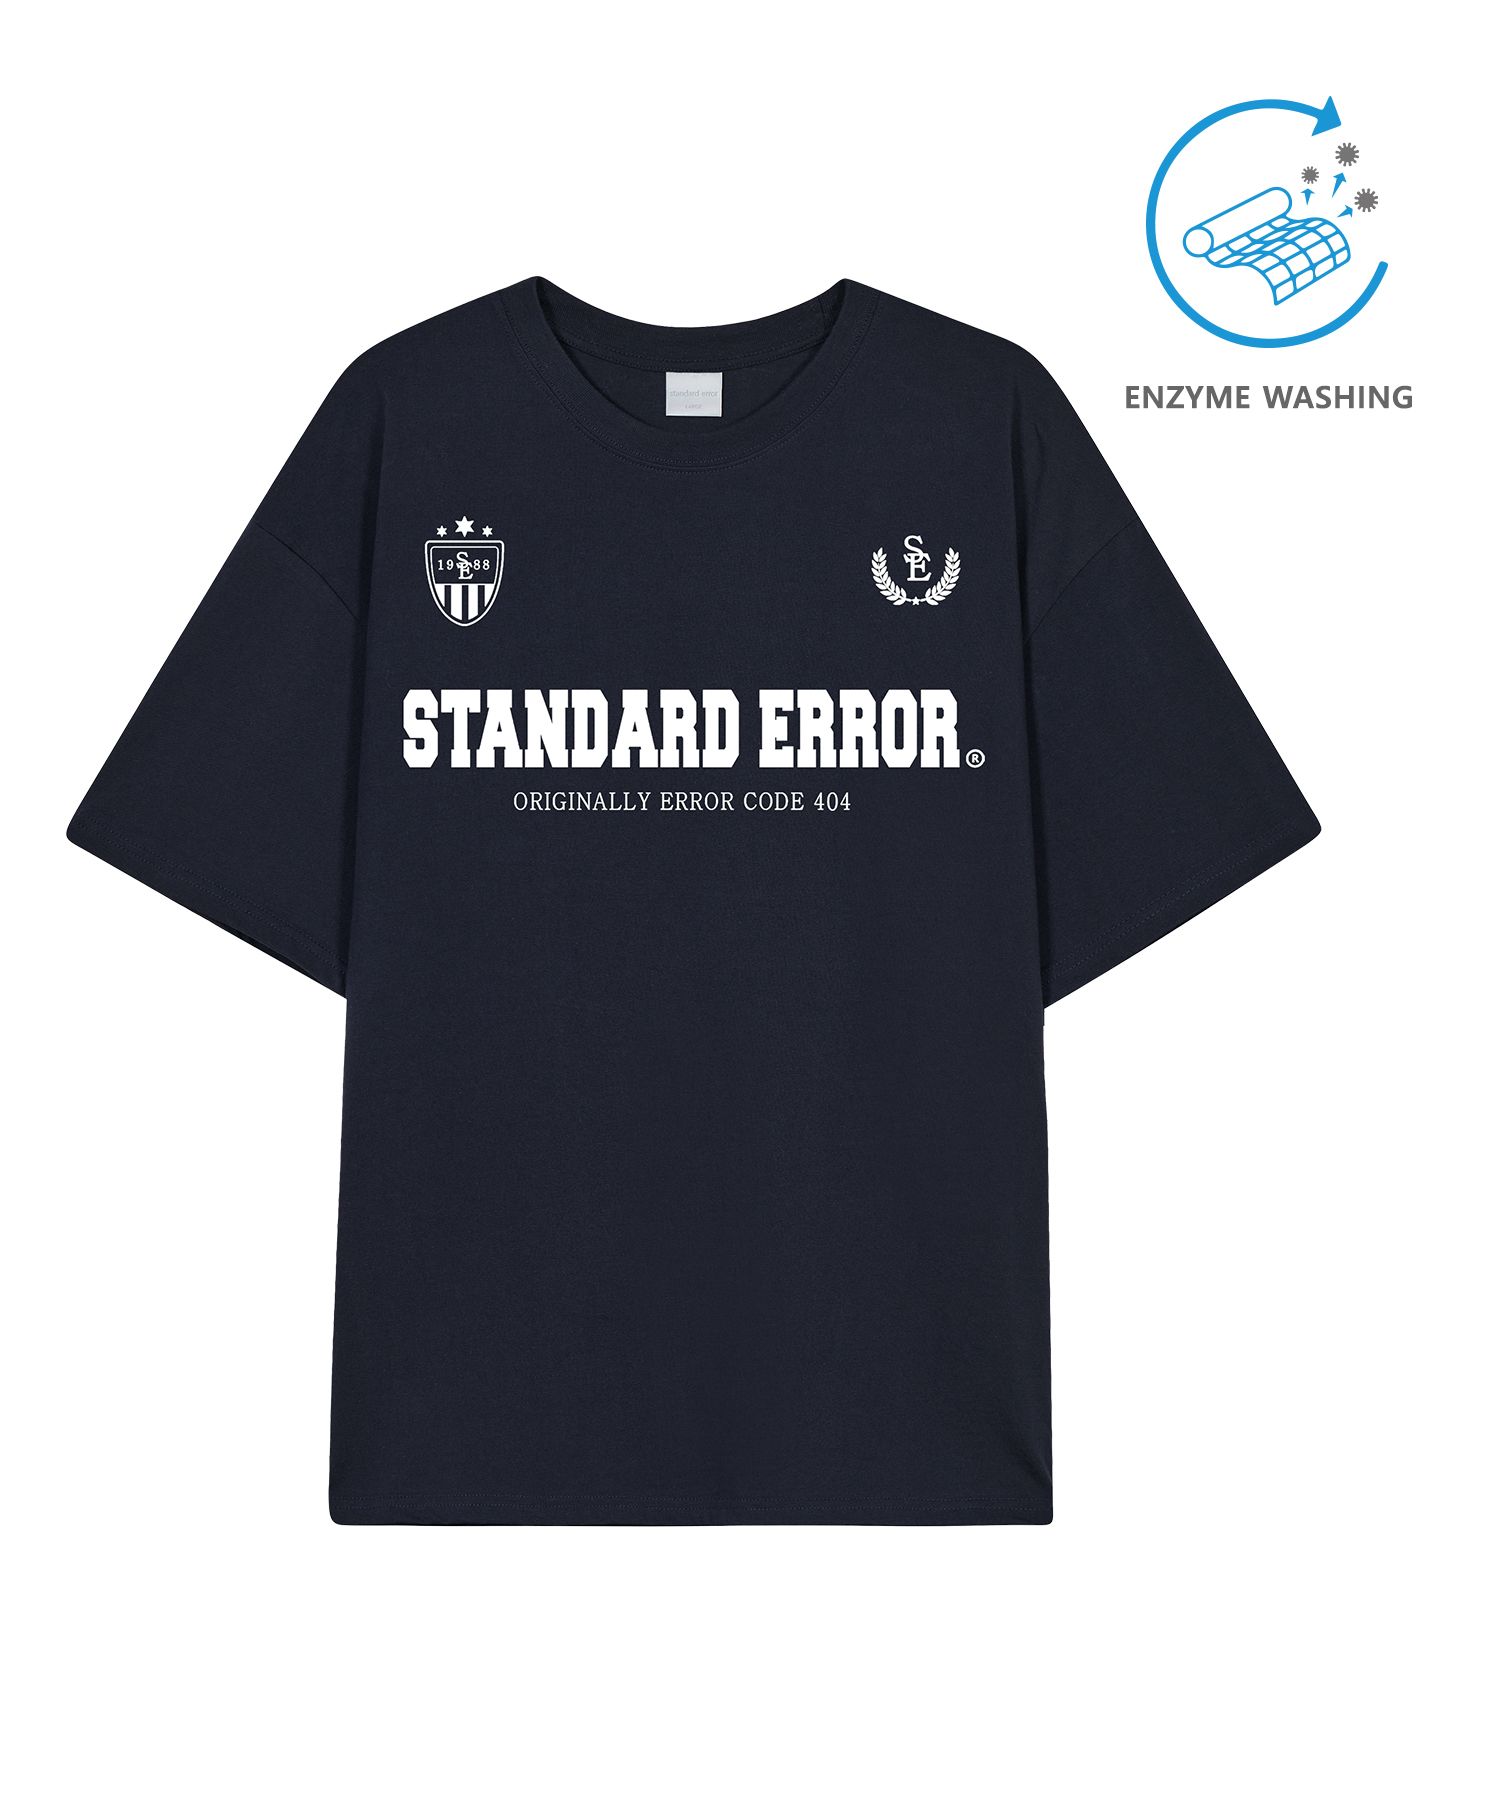 IRT165 [Compact YAN] Enzaim Washing Old School Sporty Emblem Short-sleeved T-shirt Navy